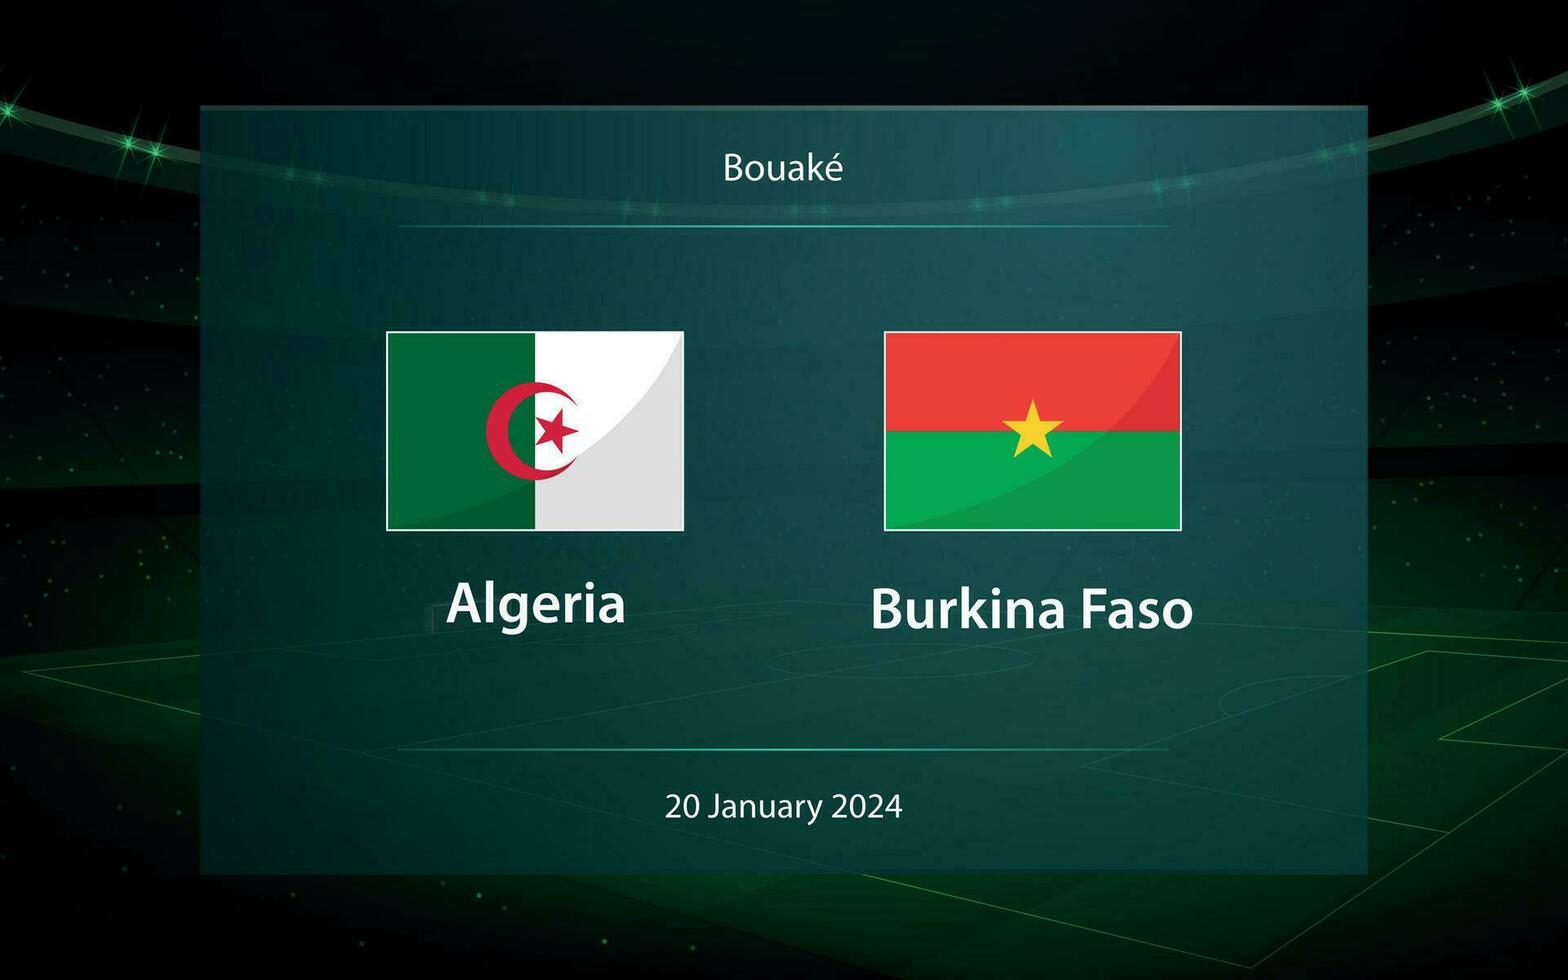 Argélia vs burkina faso. futebol placar transmissão gráfico vetor